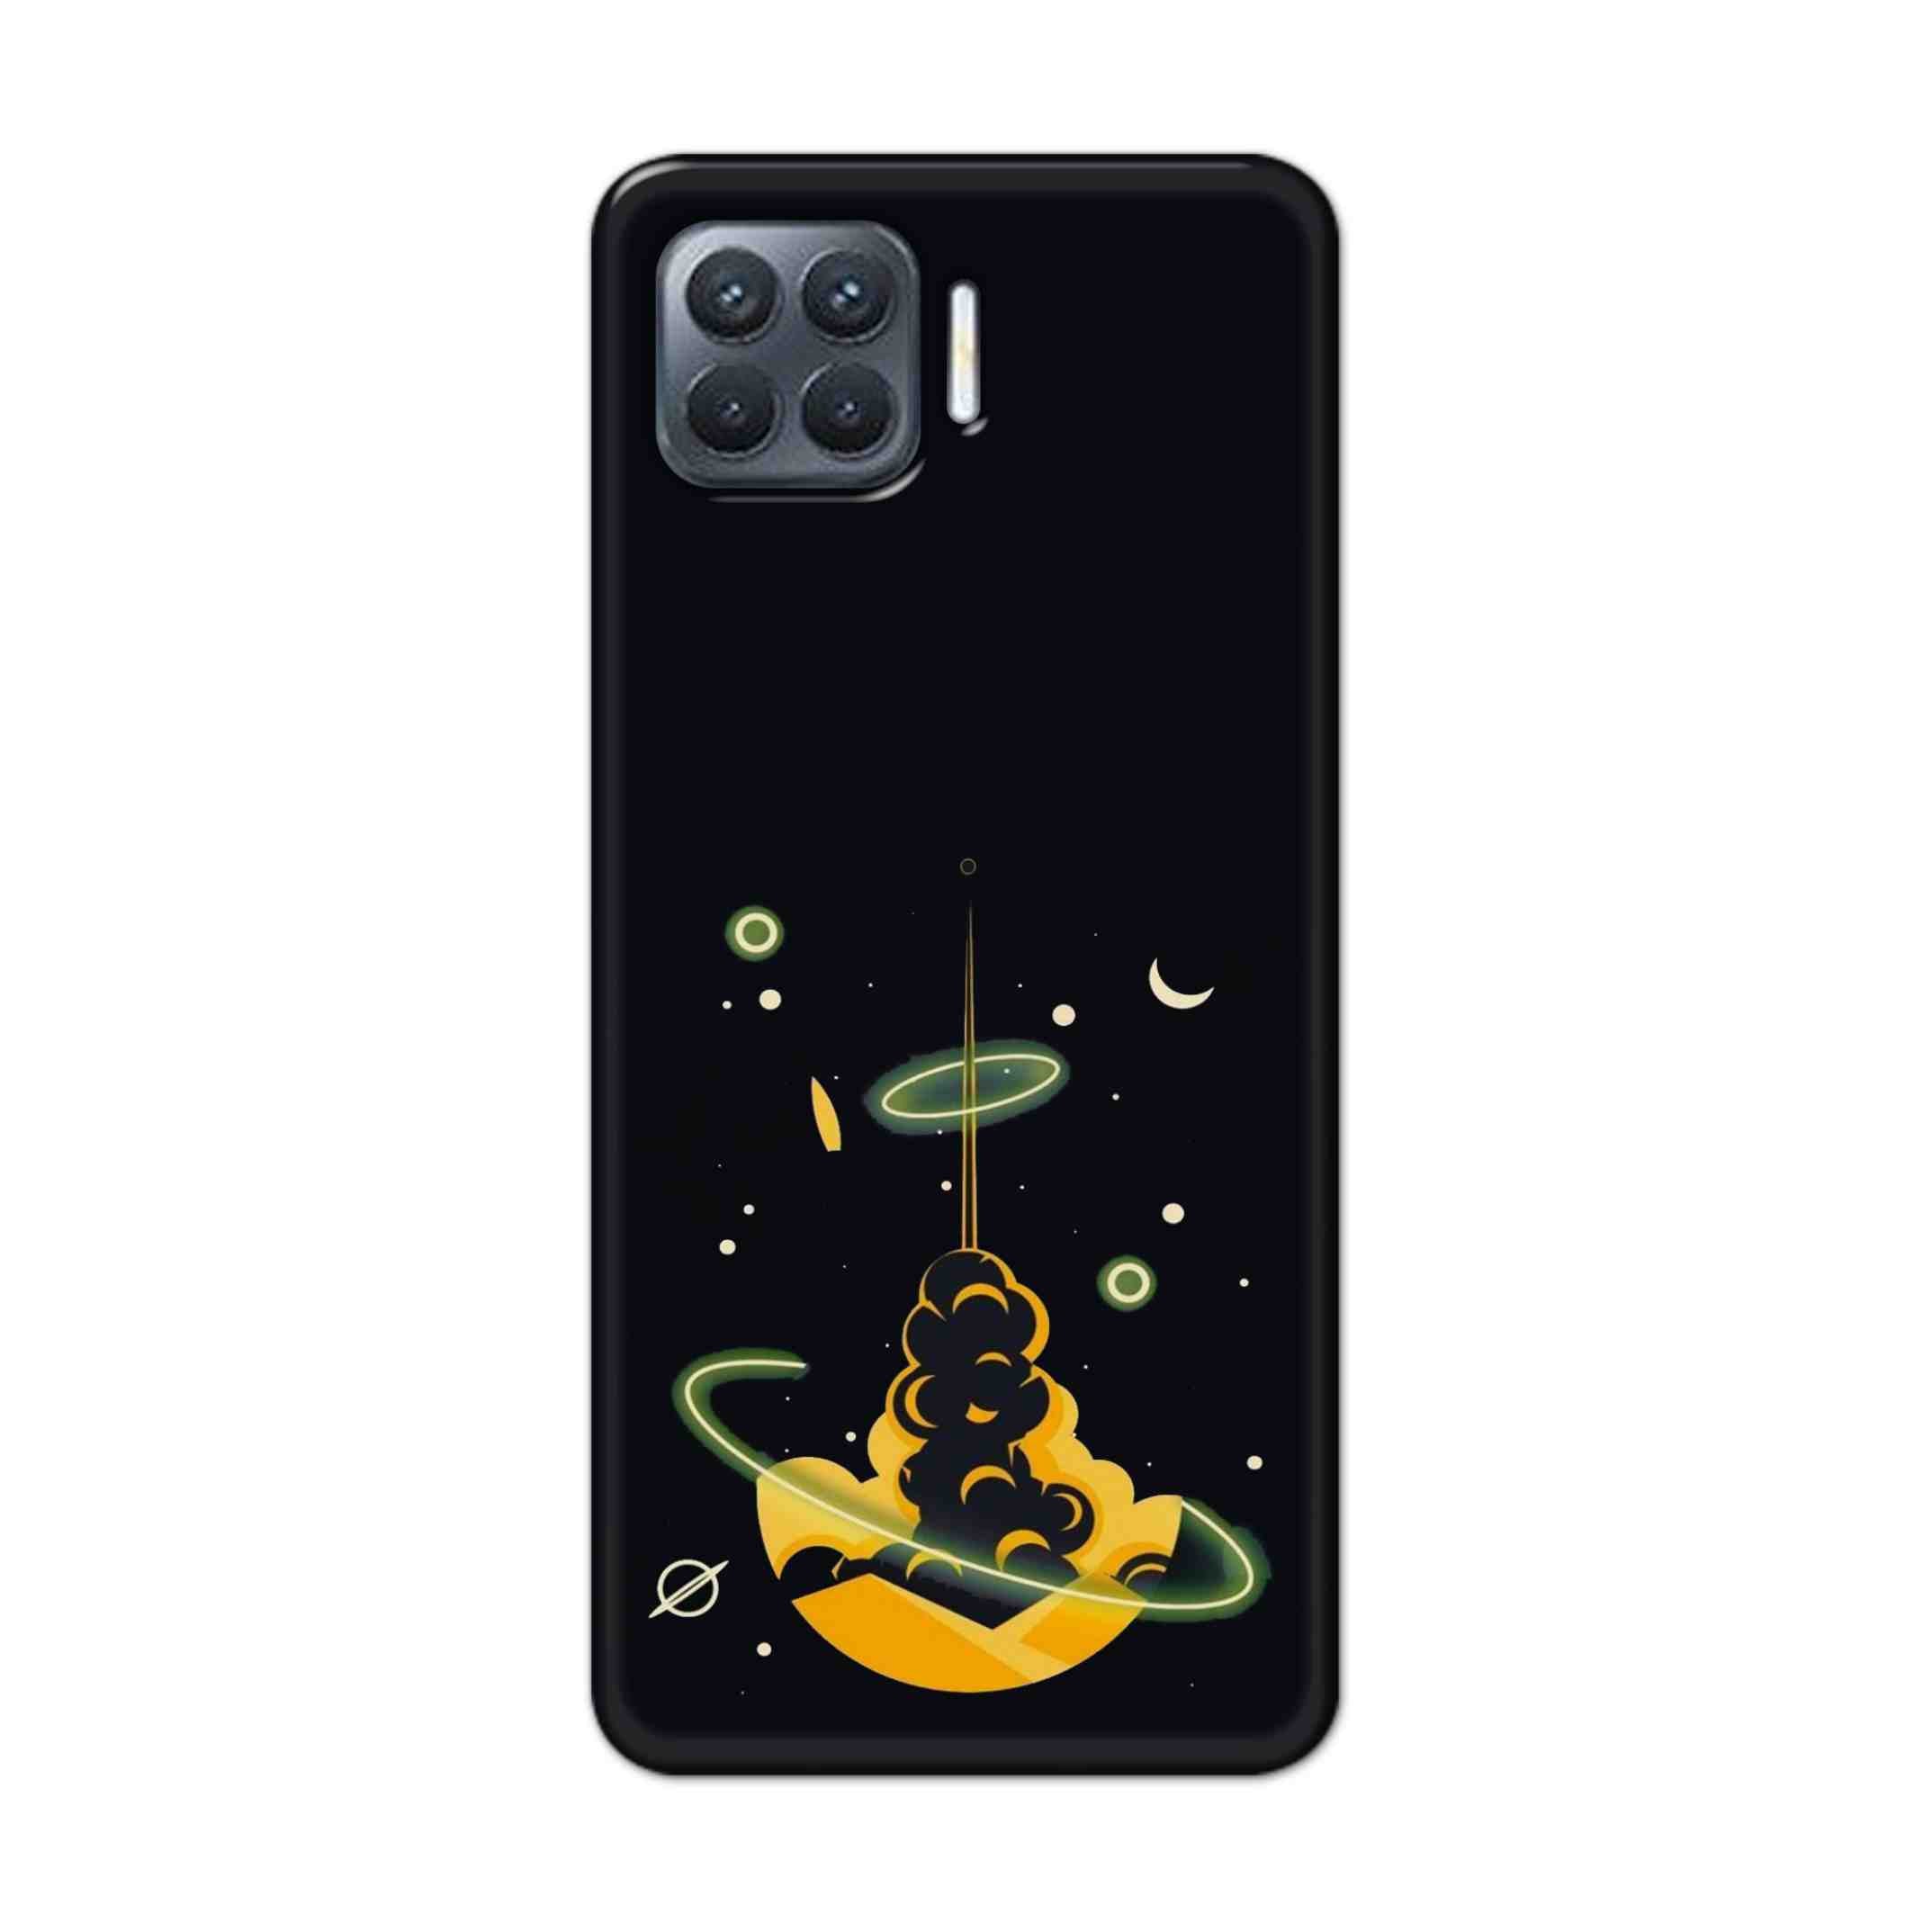 Buy Moon Hard Back Mobile Phone Case Cover For Oppo F17 Pro Online